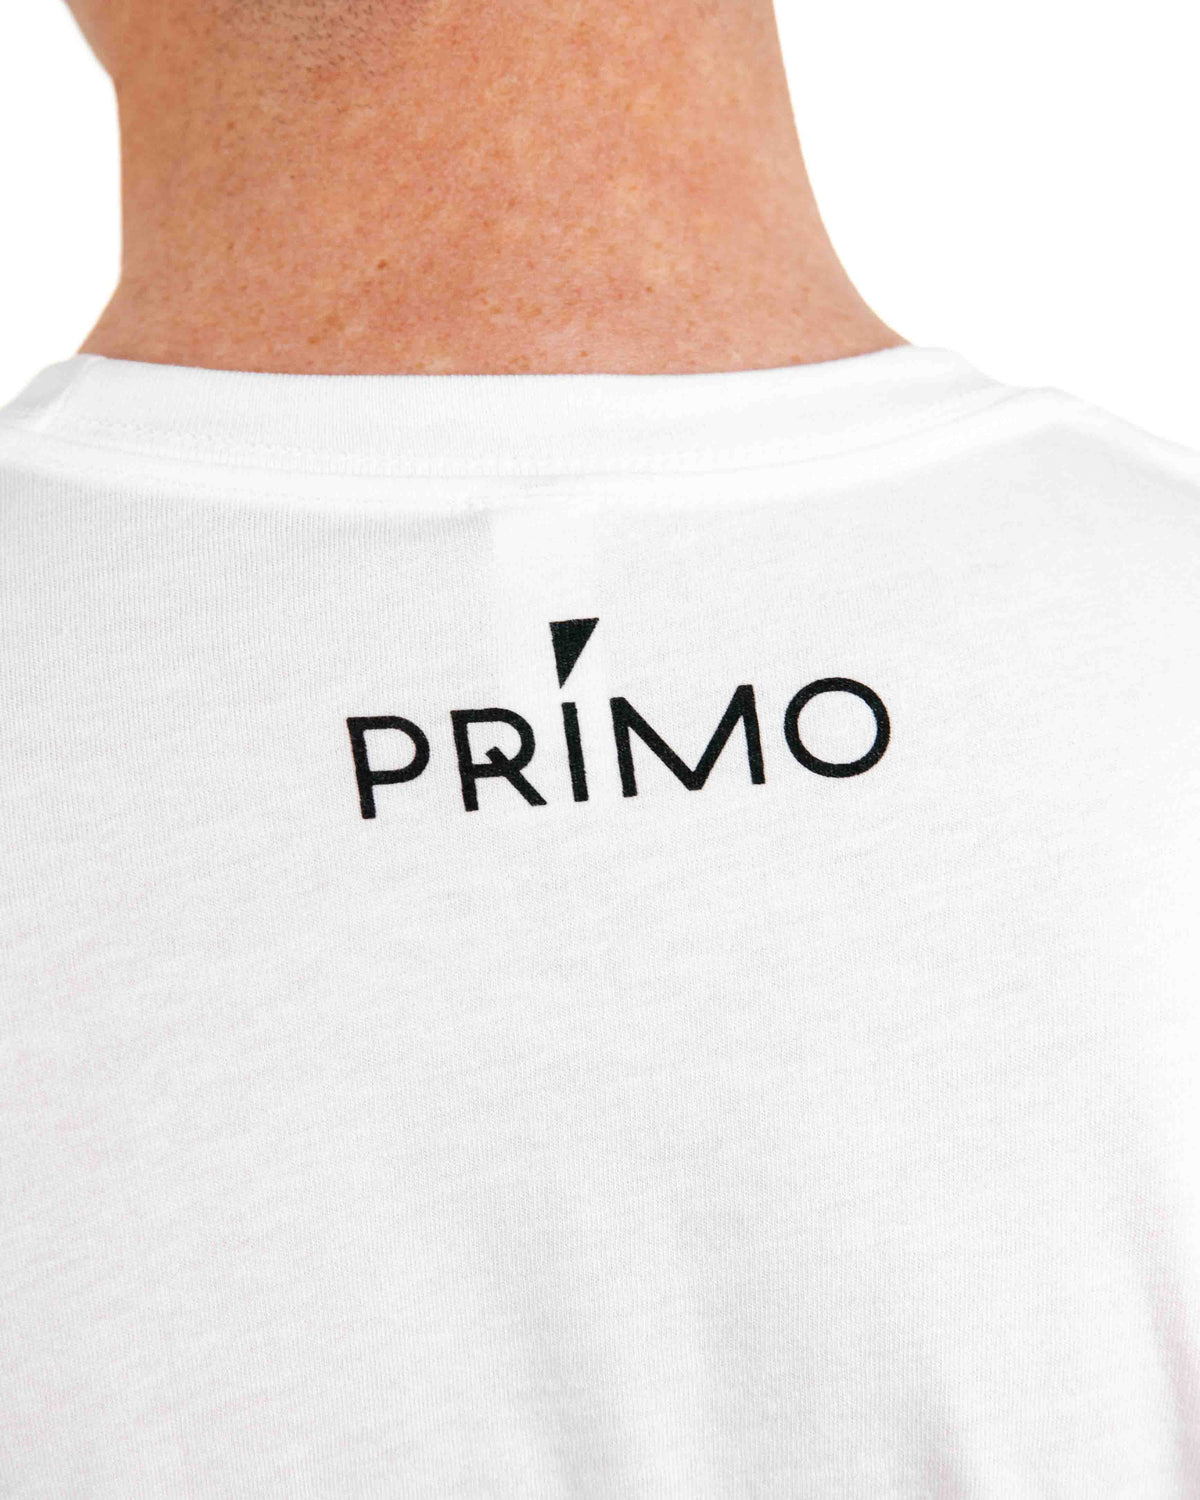 Primo Wordmark Logo Back